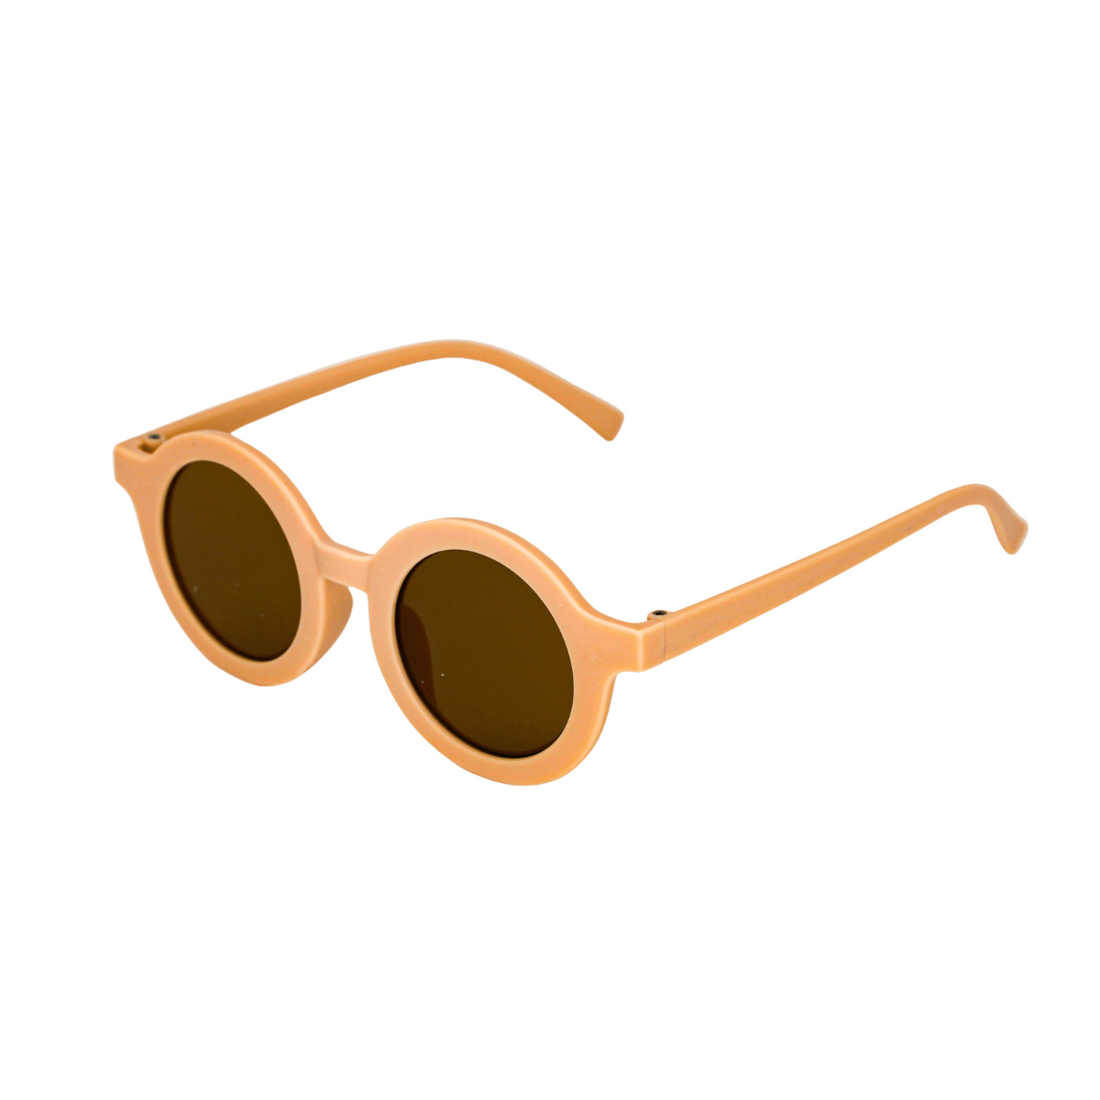 Jetsetters Sunglasses - Unisex - Peach (3-6 years)